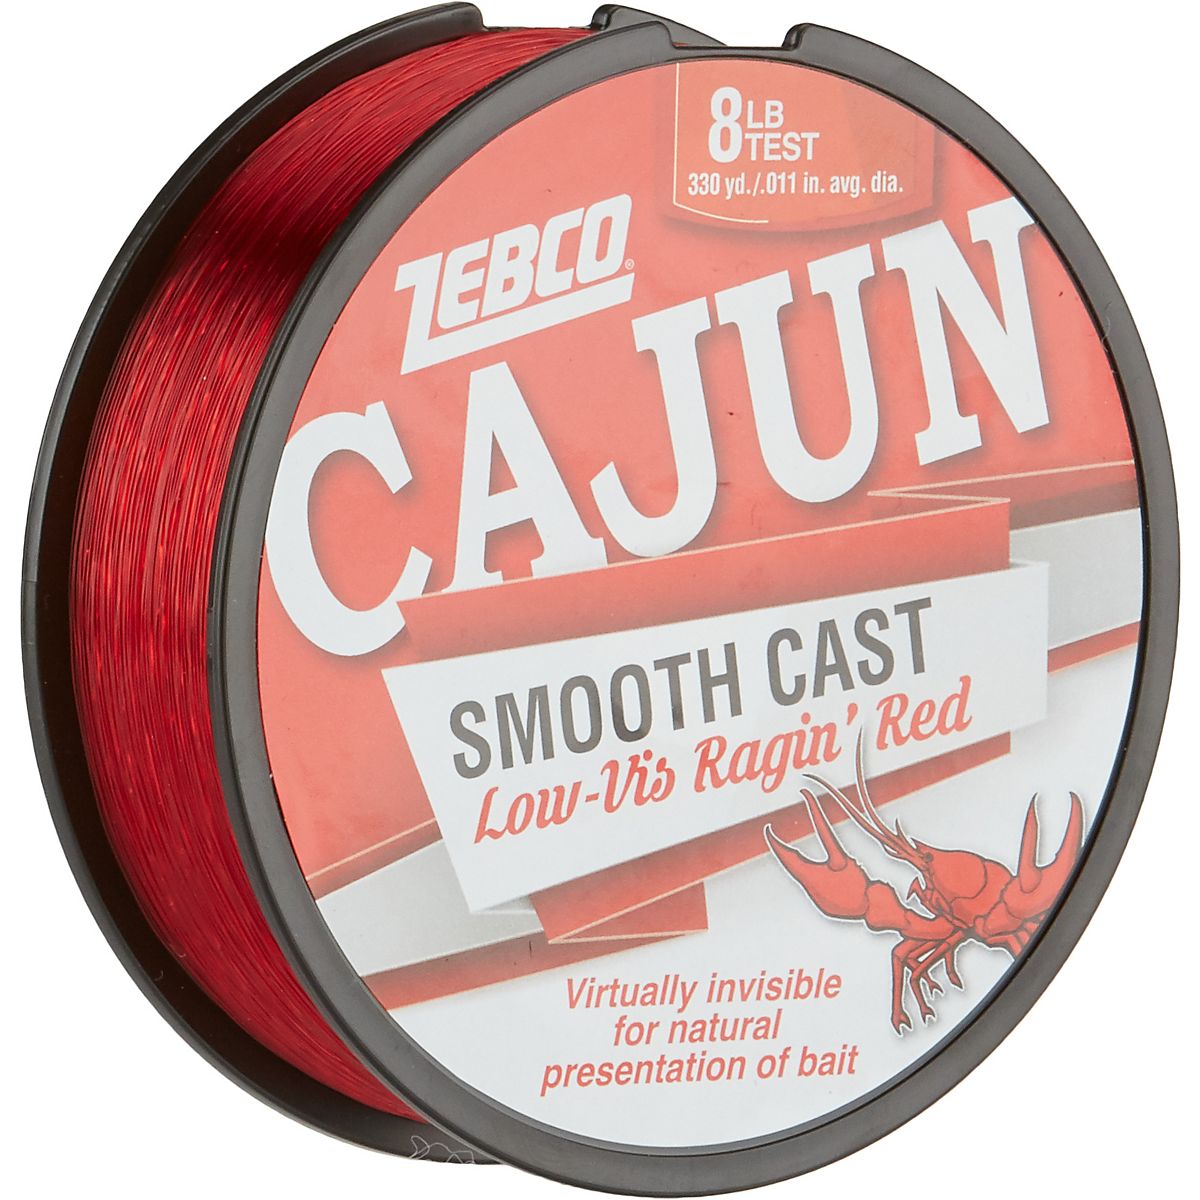 Zebco Cajun Smooth Cast Low-Vis Ragin' Red 12#/330yds Fishing Line 